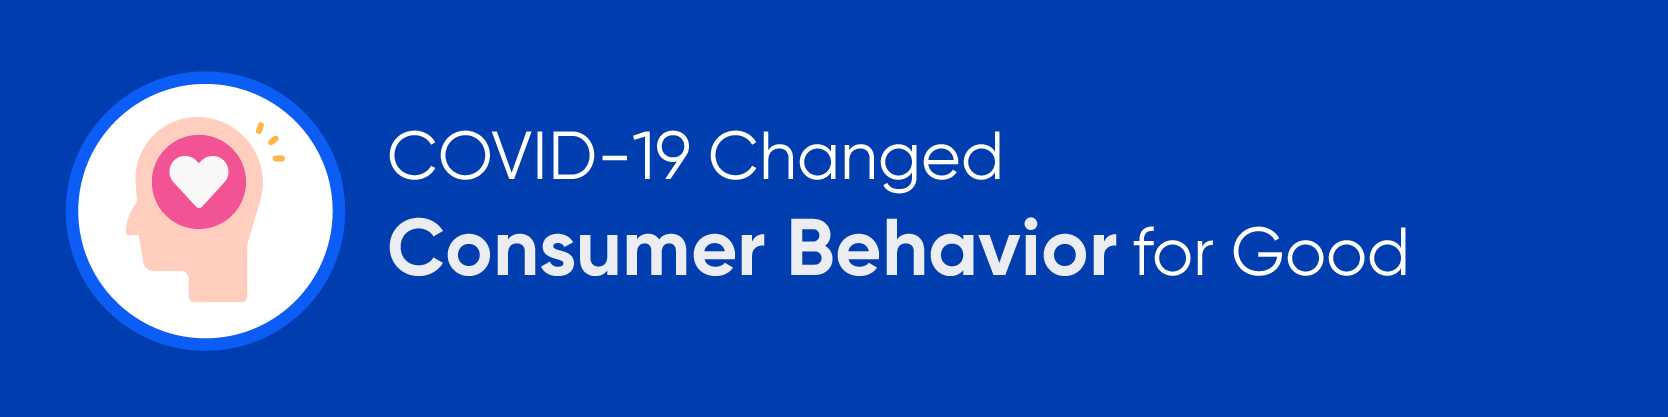 COVID-19 Changed Consumer Behavior for Good